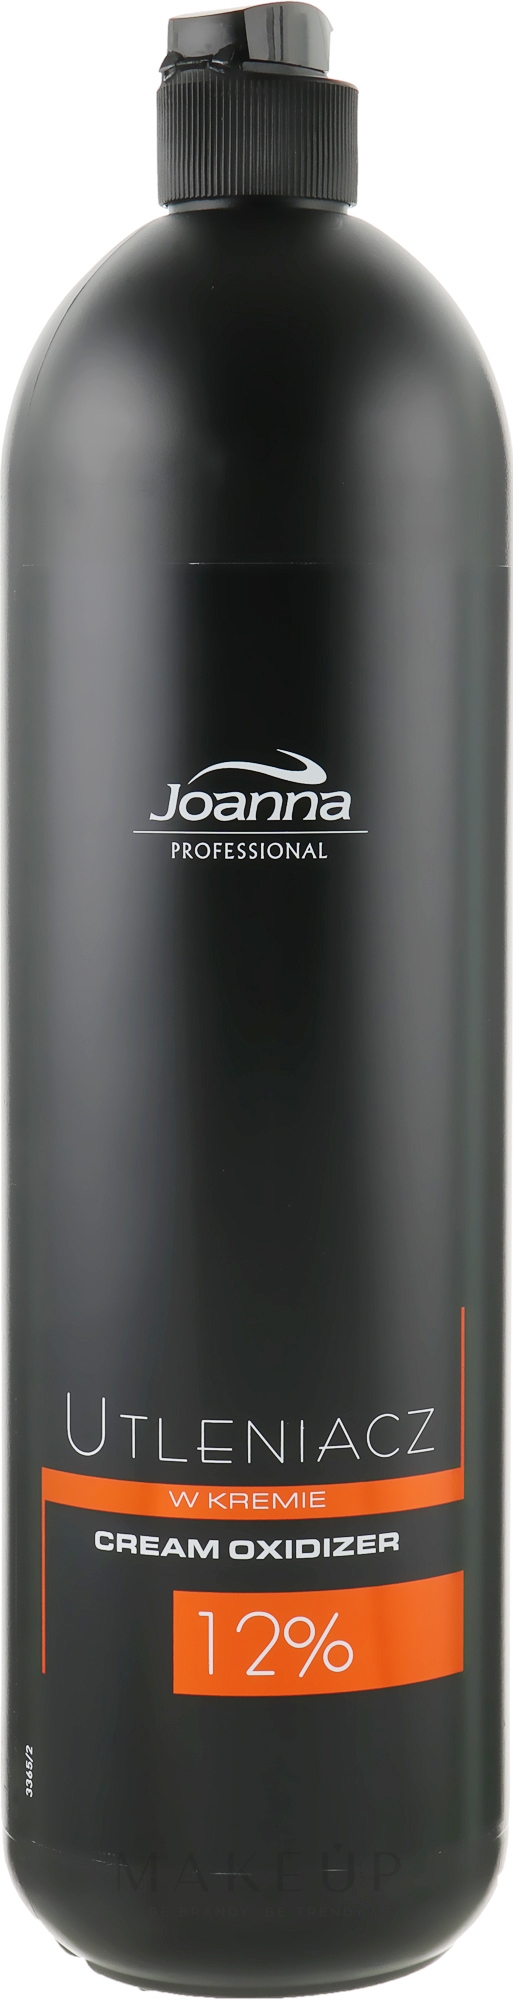 Creme-Oxidationsmittel 12% - Joanna Professional Cream Oxidizer 12% — Foto 1000 g